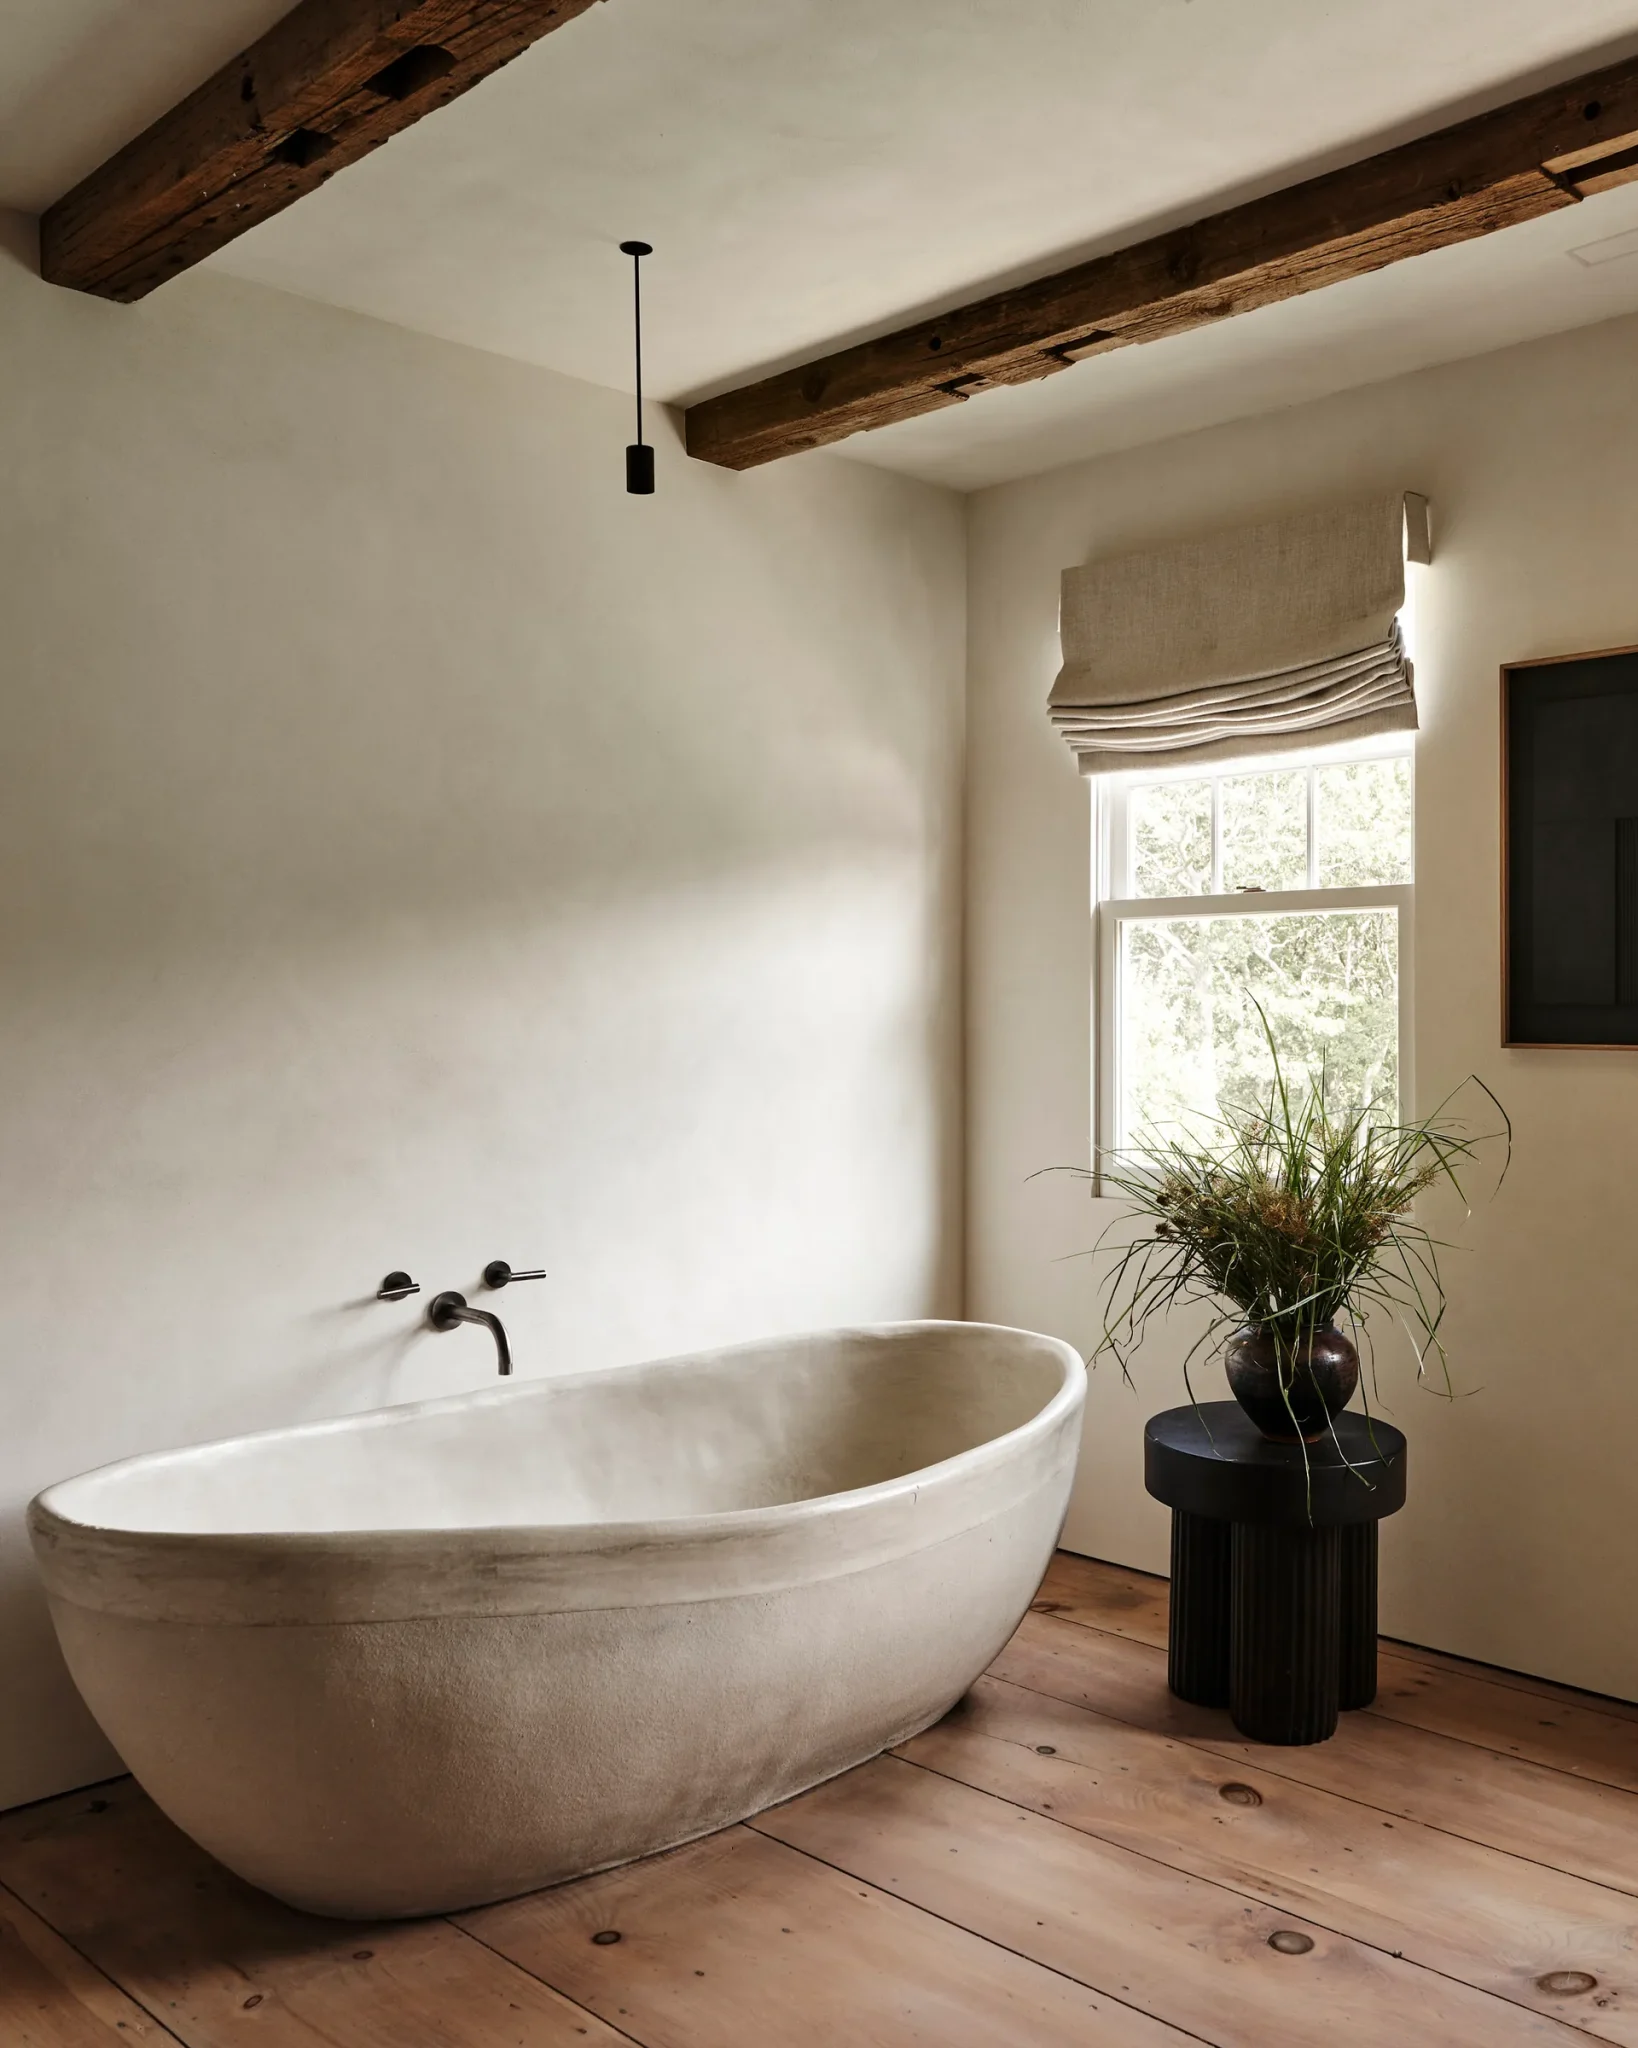 A clay bathtub in a contemporary interior design